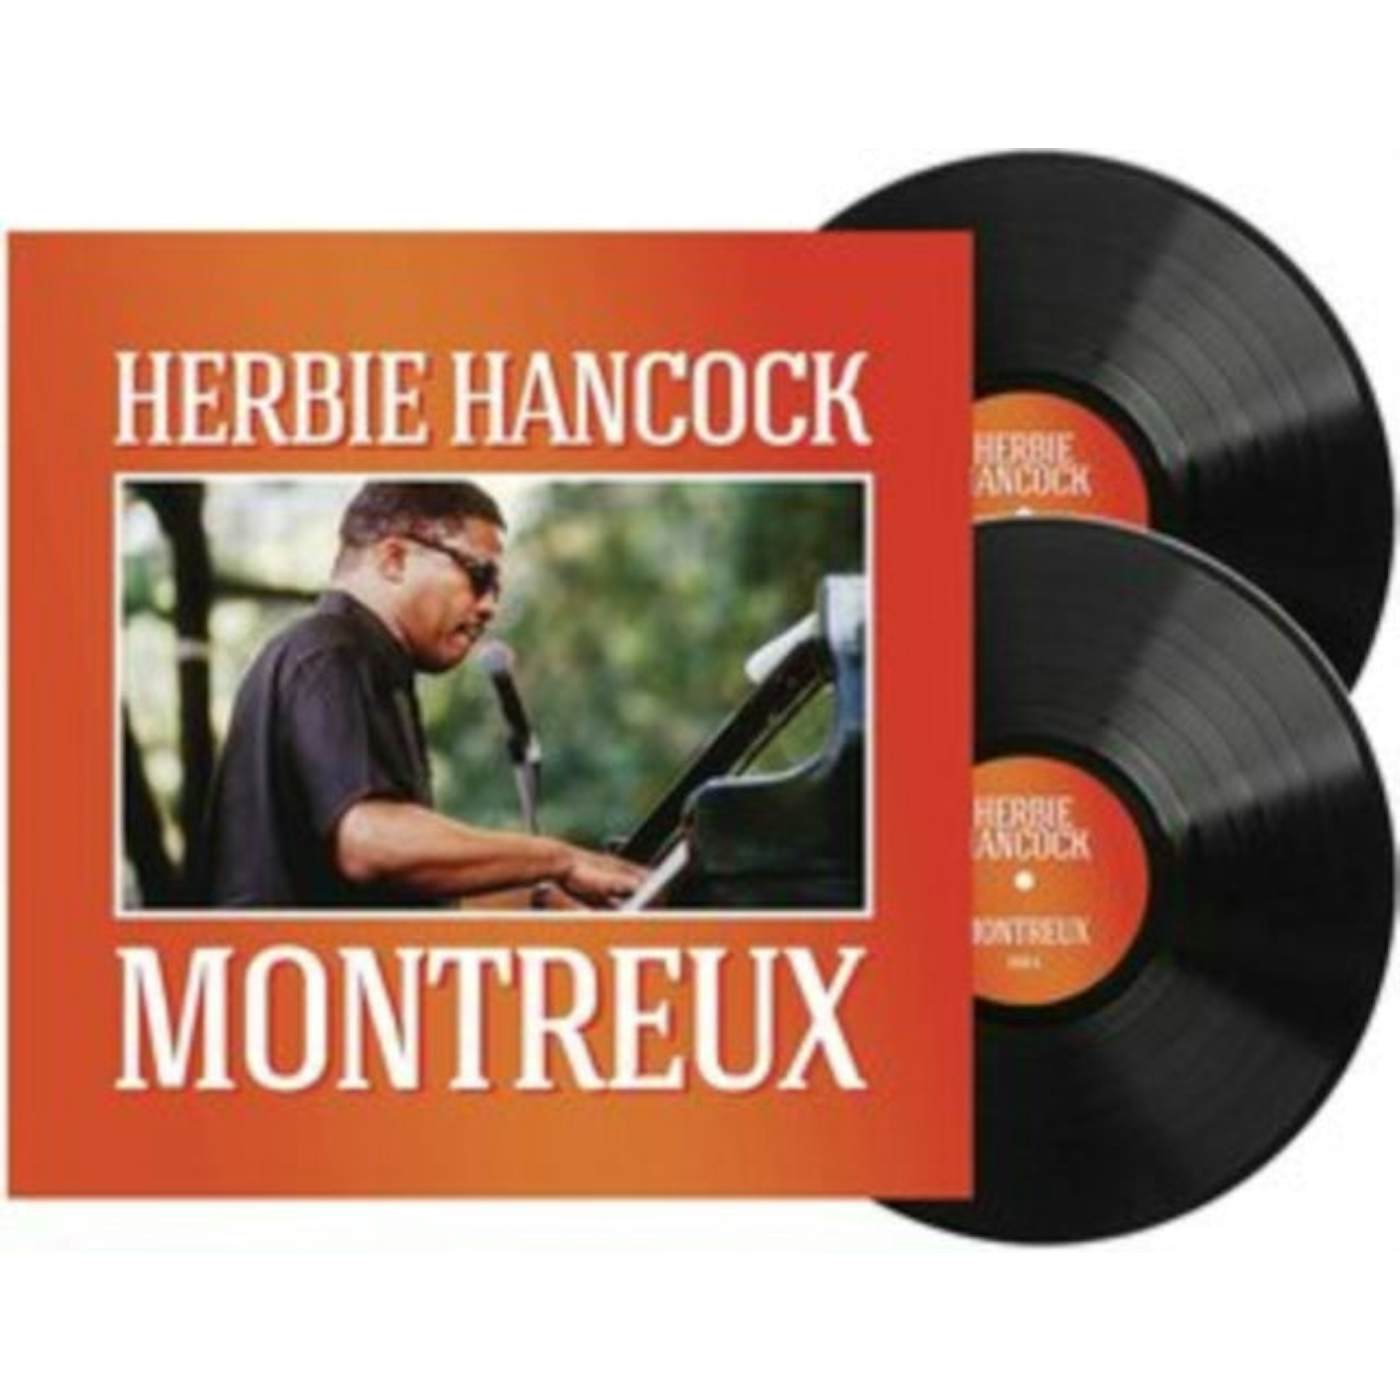 Herbie Hancock LP - Montreux (Vinyl)